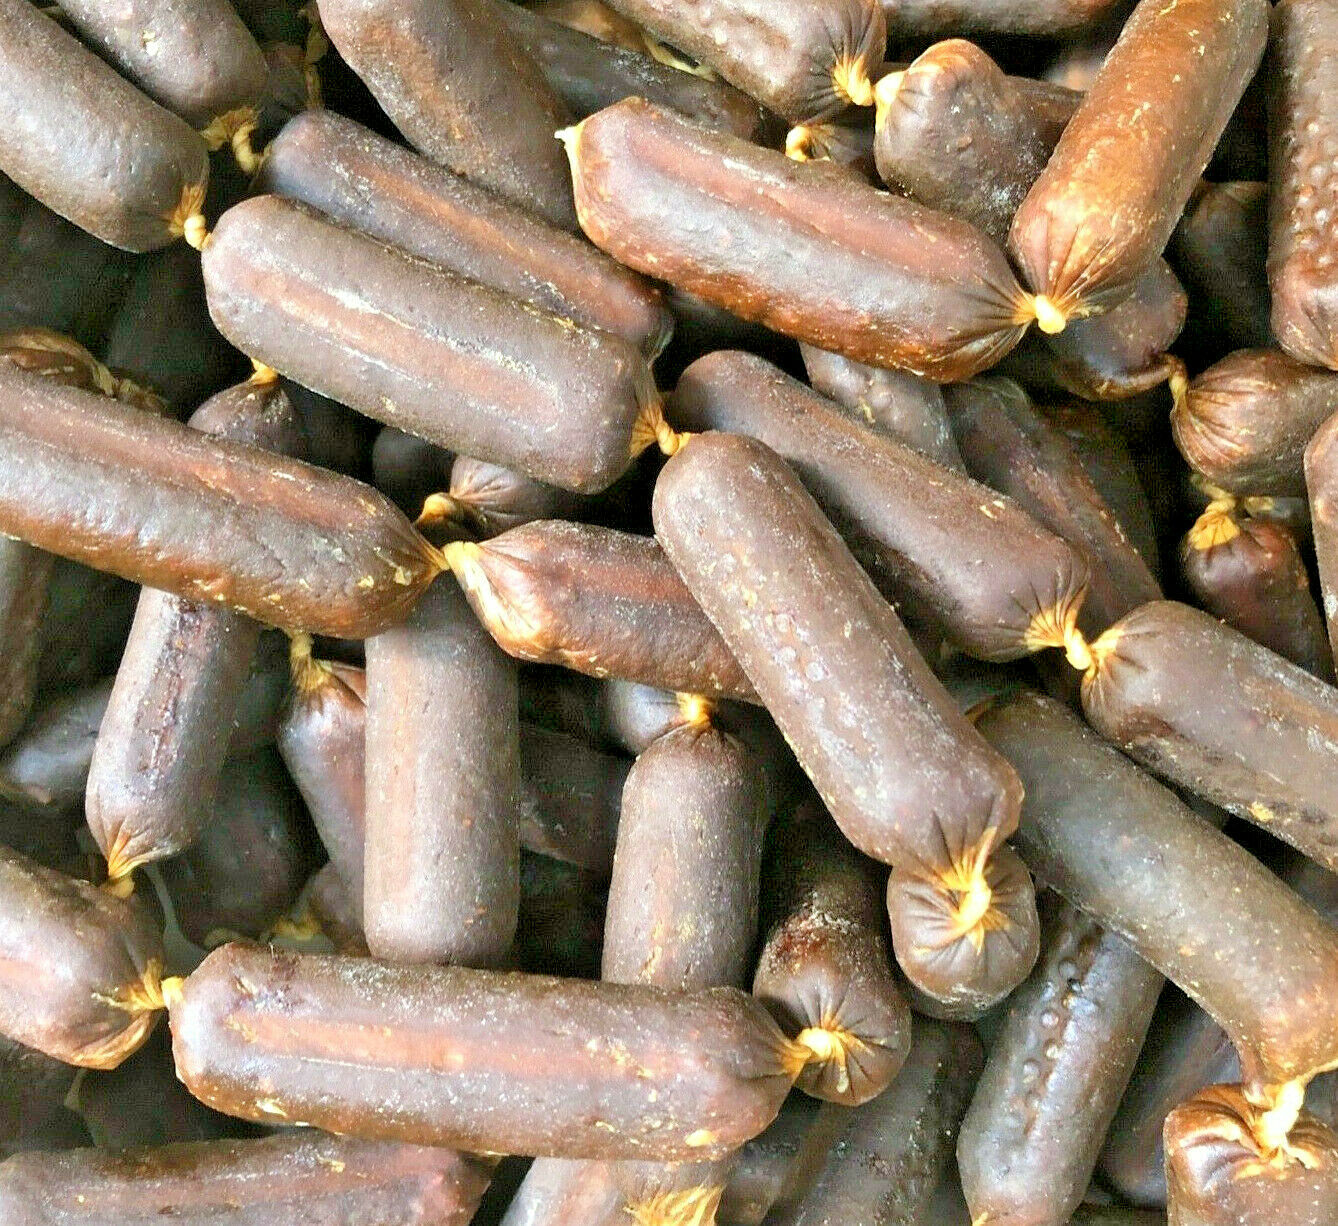 Paddock Farm - Sausages